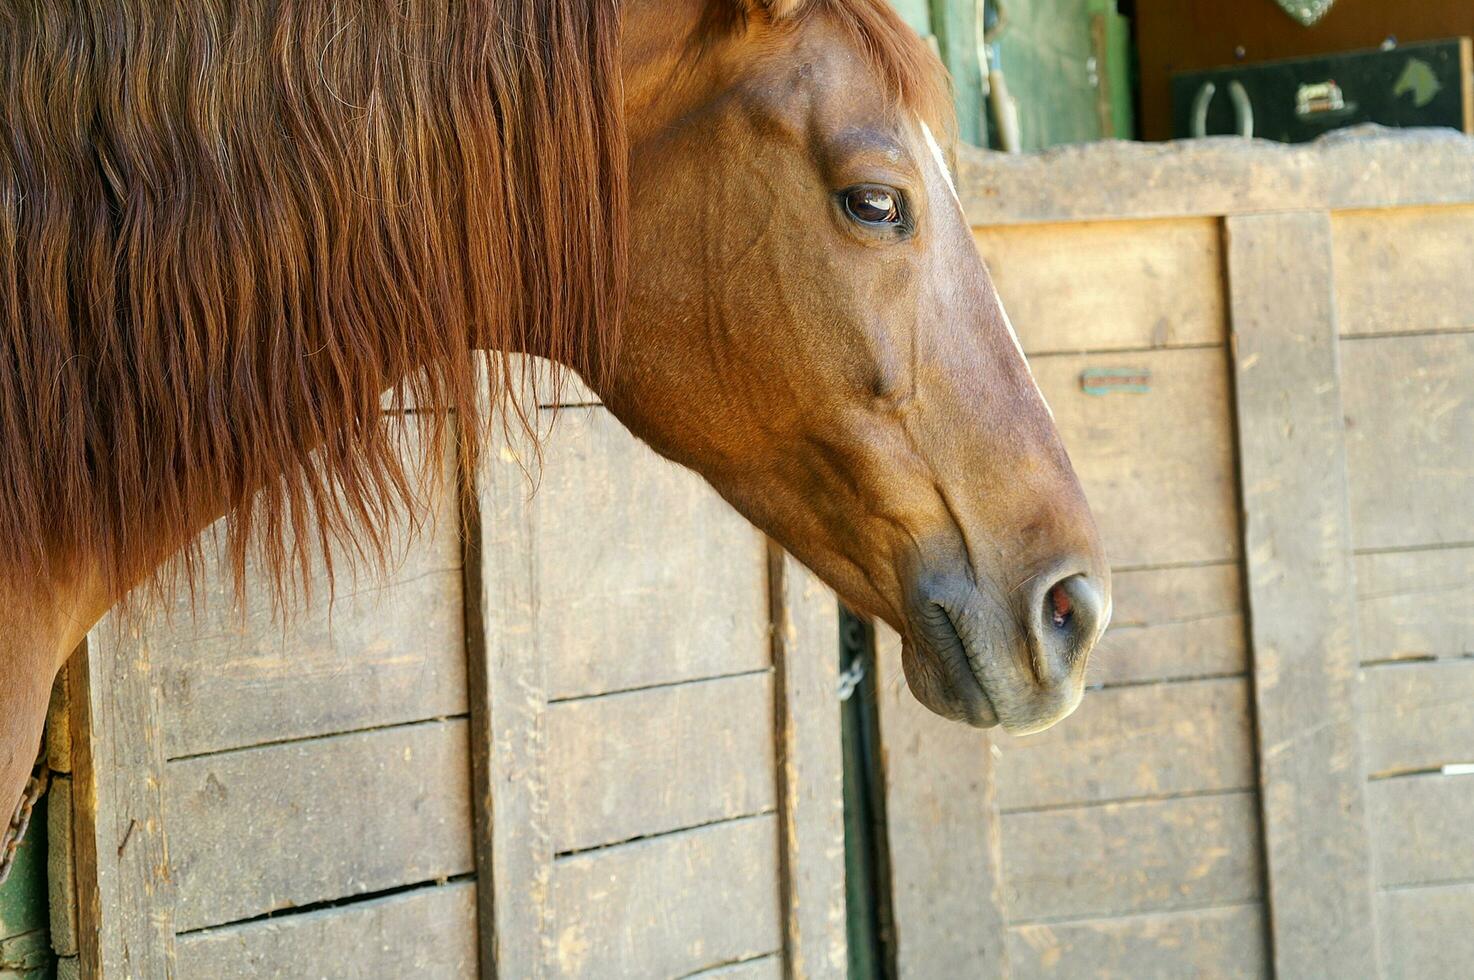 a close up of a horse's head photo